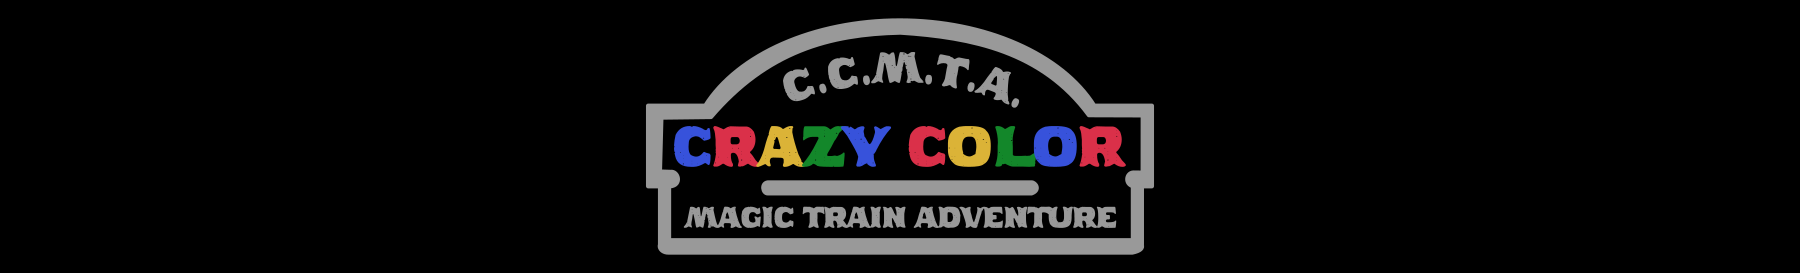 Crazy Color Magic Train Adventure